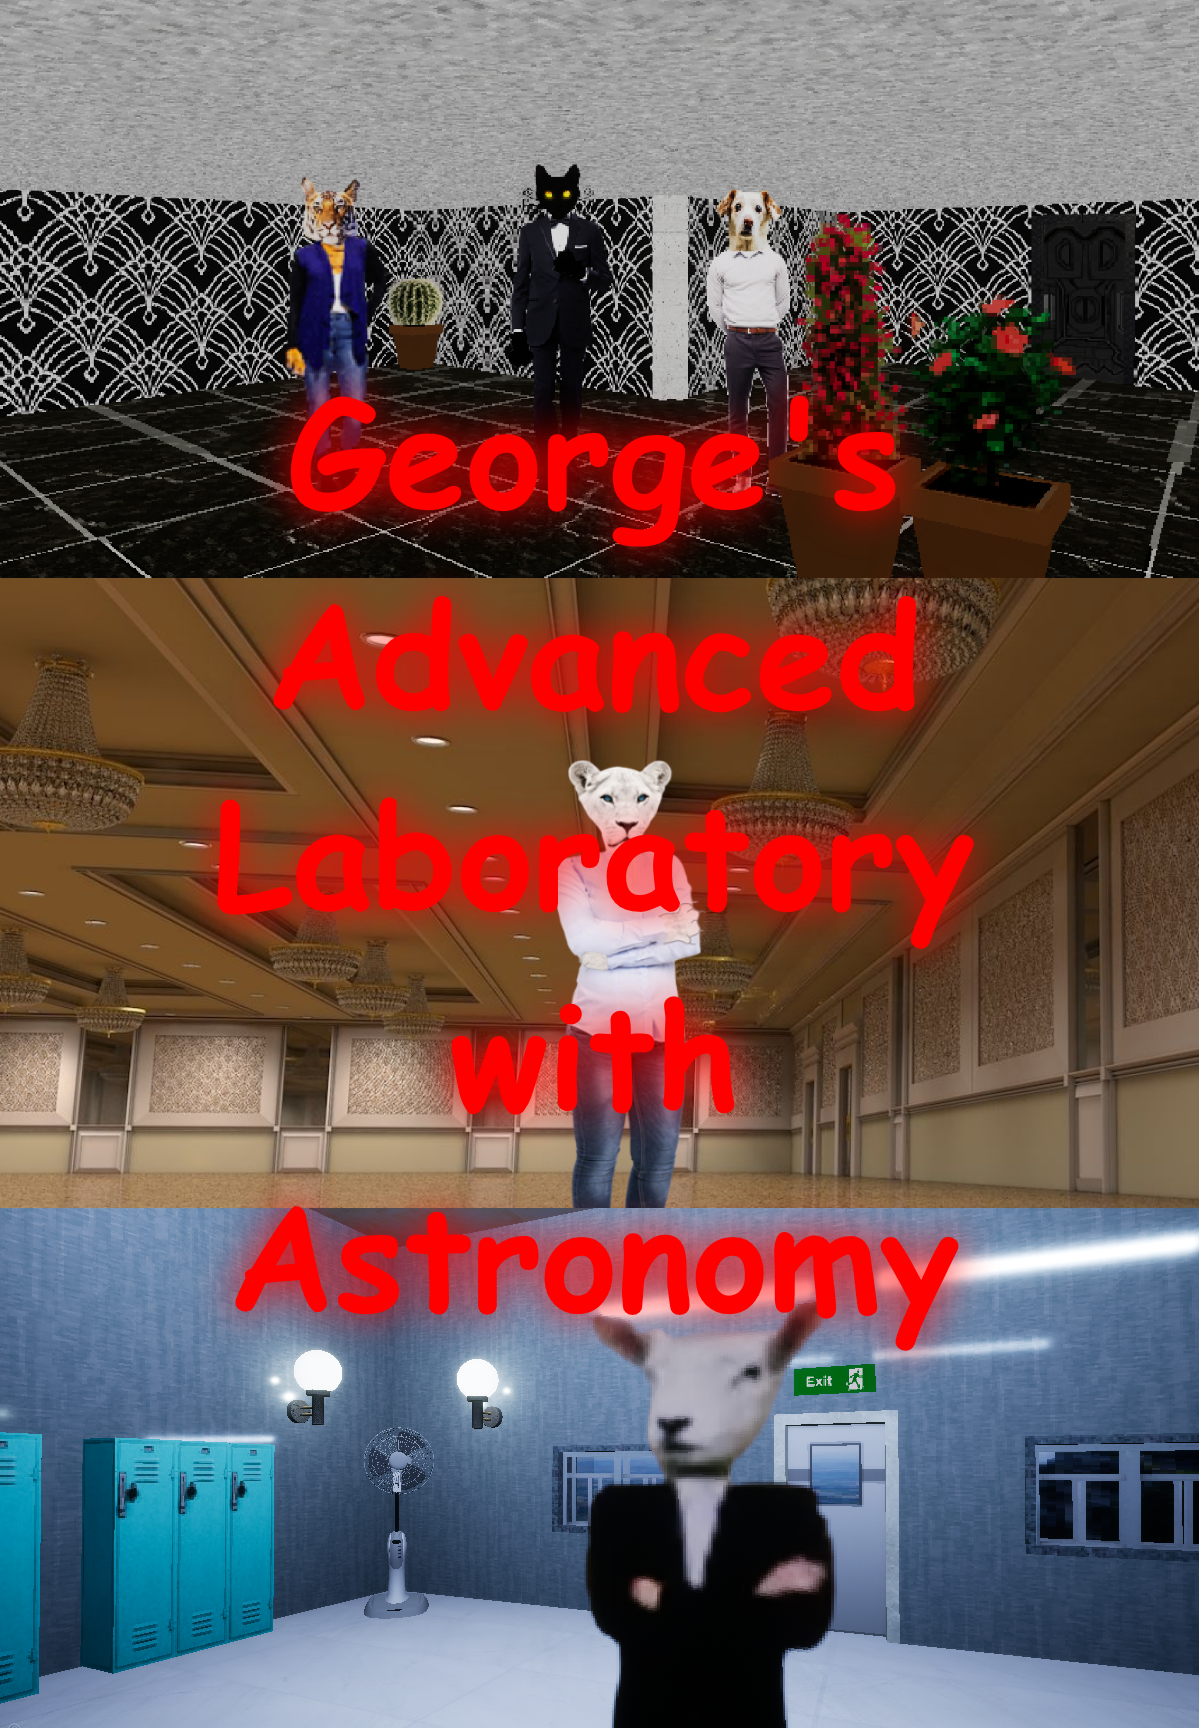 George Davis’ Advanced Laboratory with Astronomy